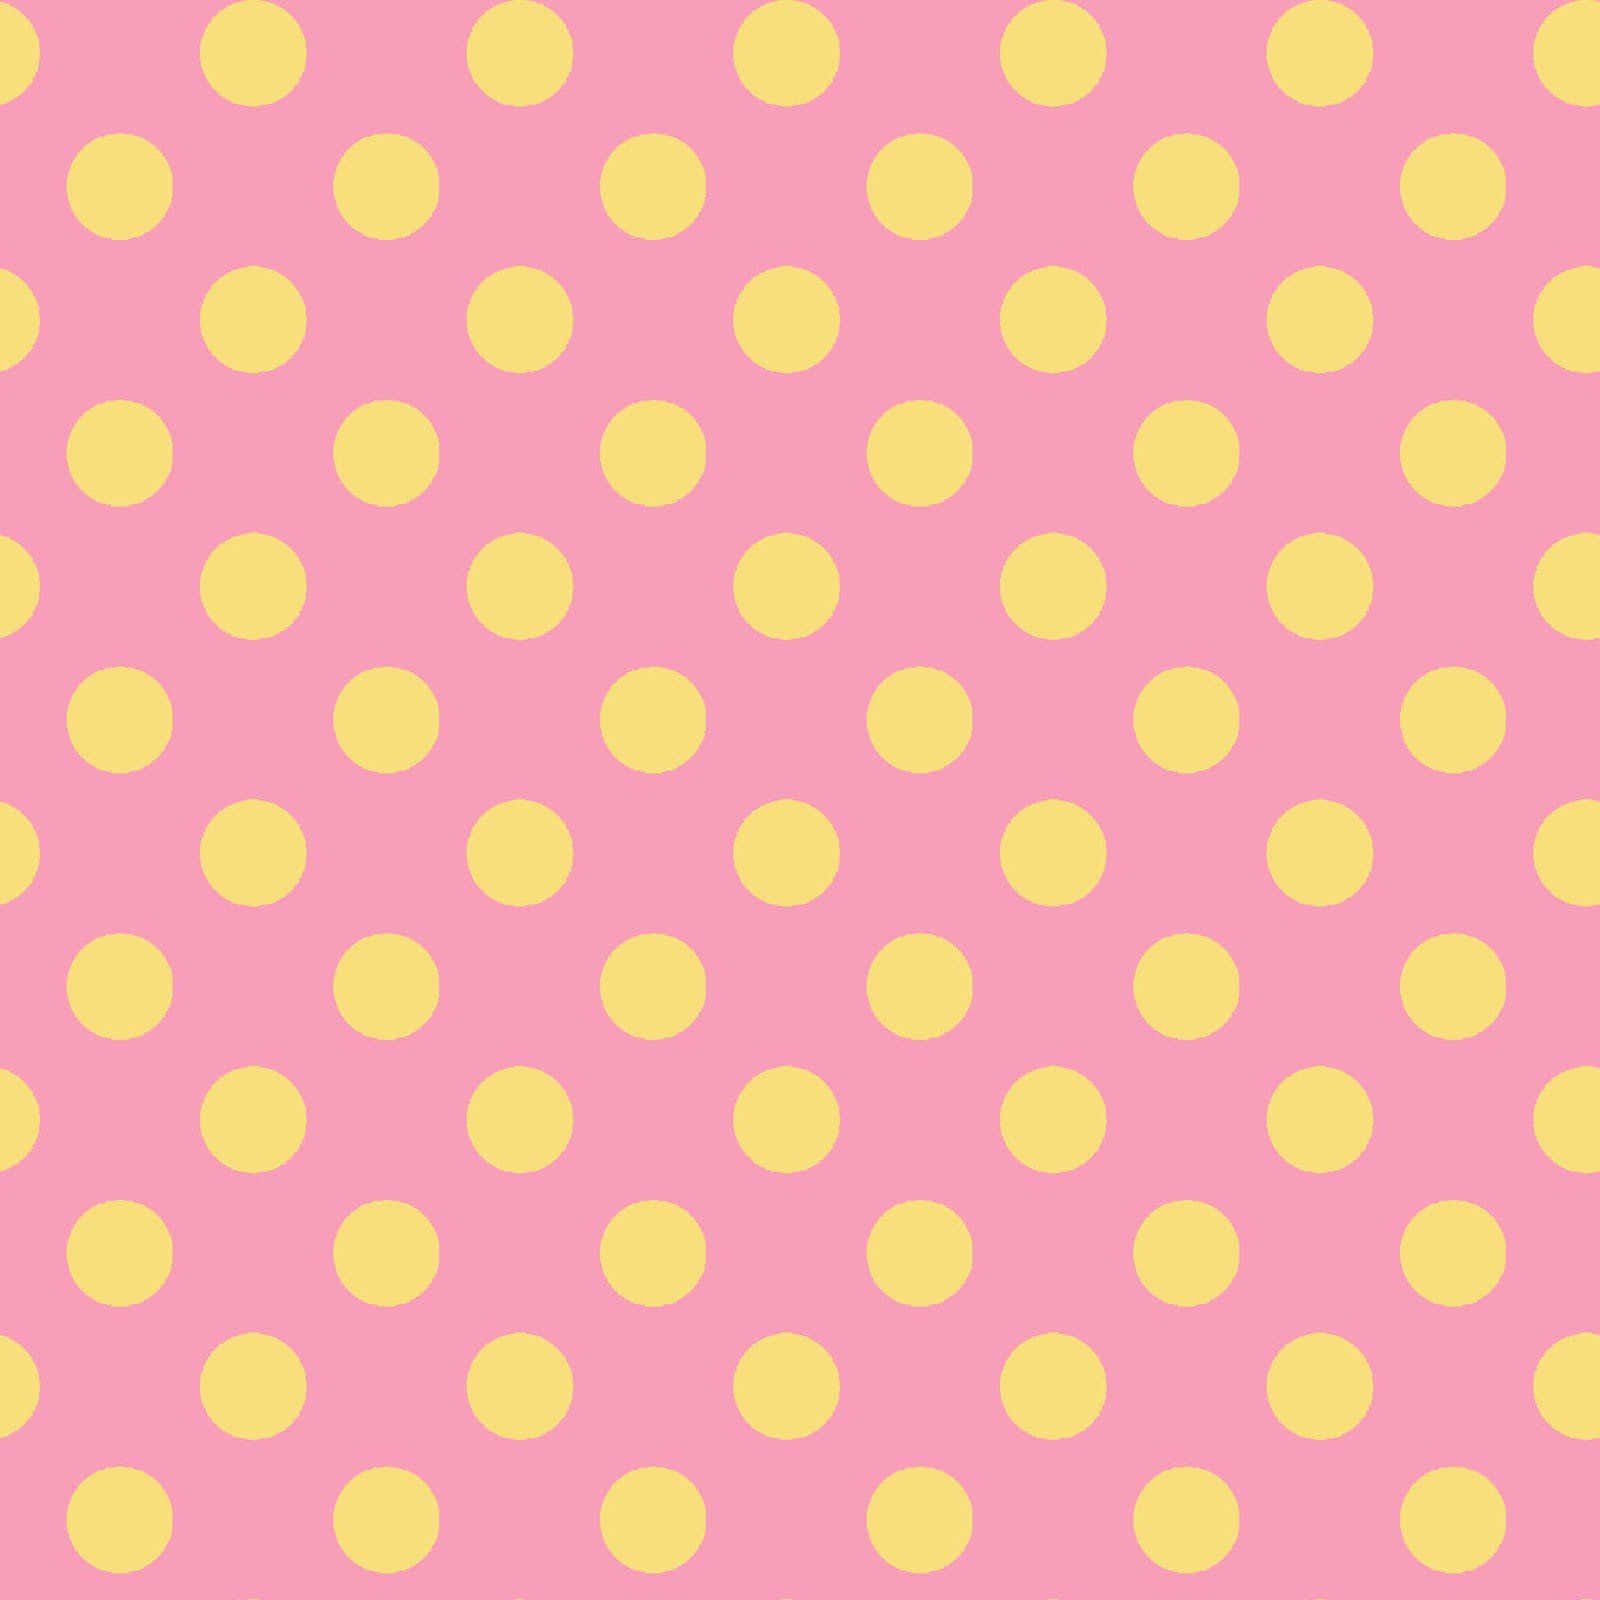 Cheerful yellow polka dot pattern Wallpaper